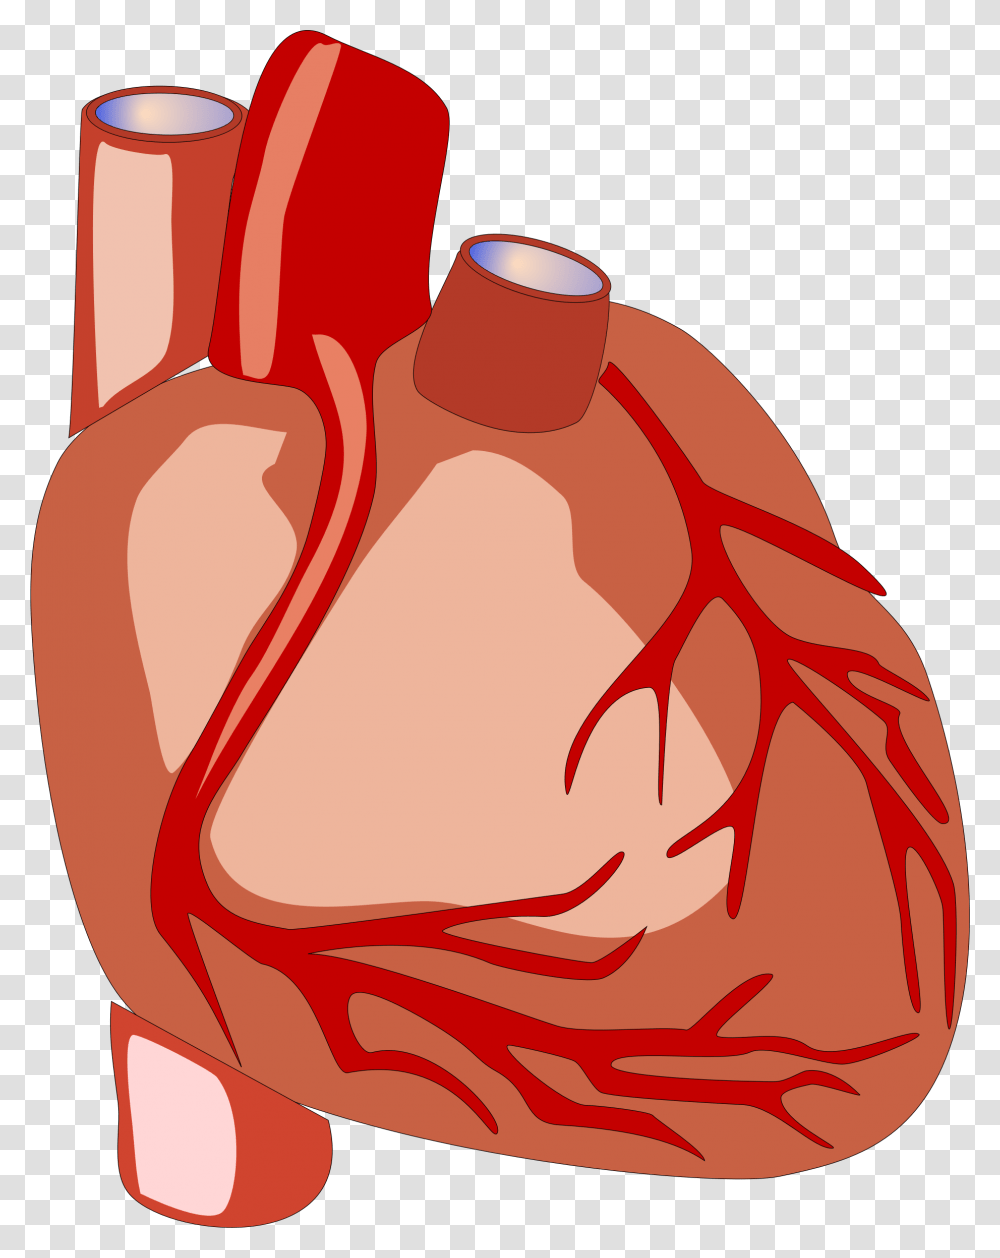 Human Heart Vector File Image Human Heart Clipart, Apparel, Food, Bag Transparent Png